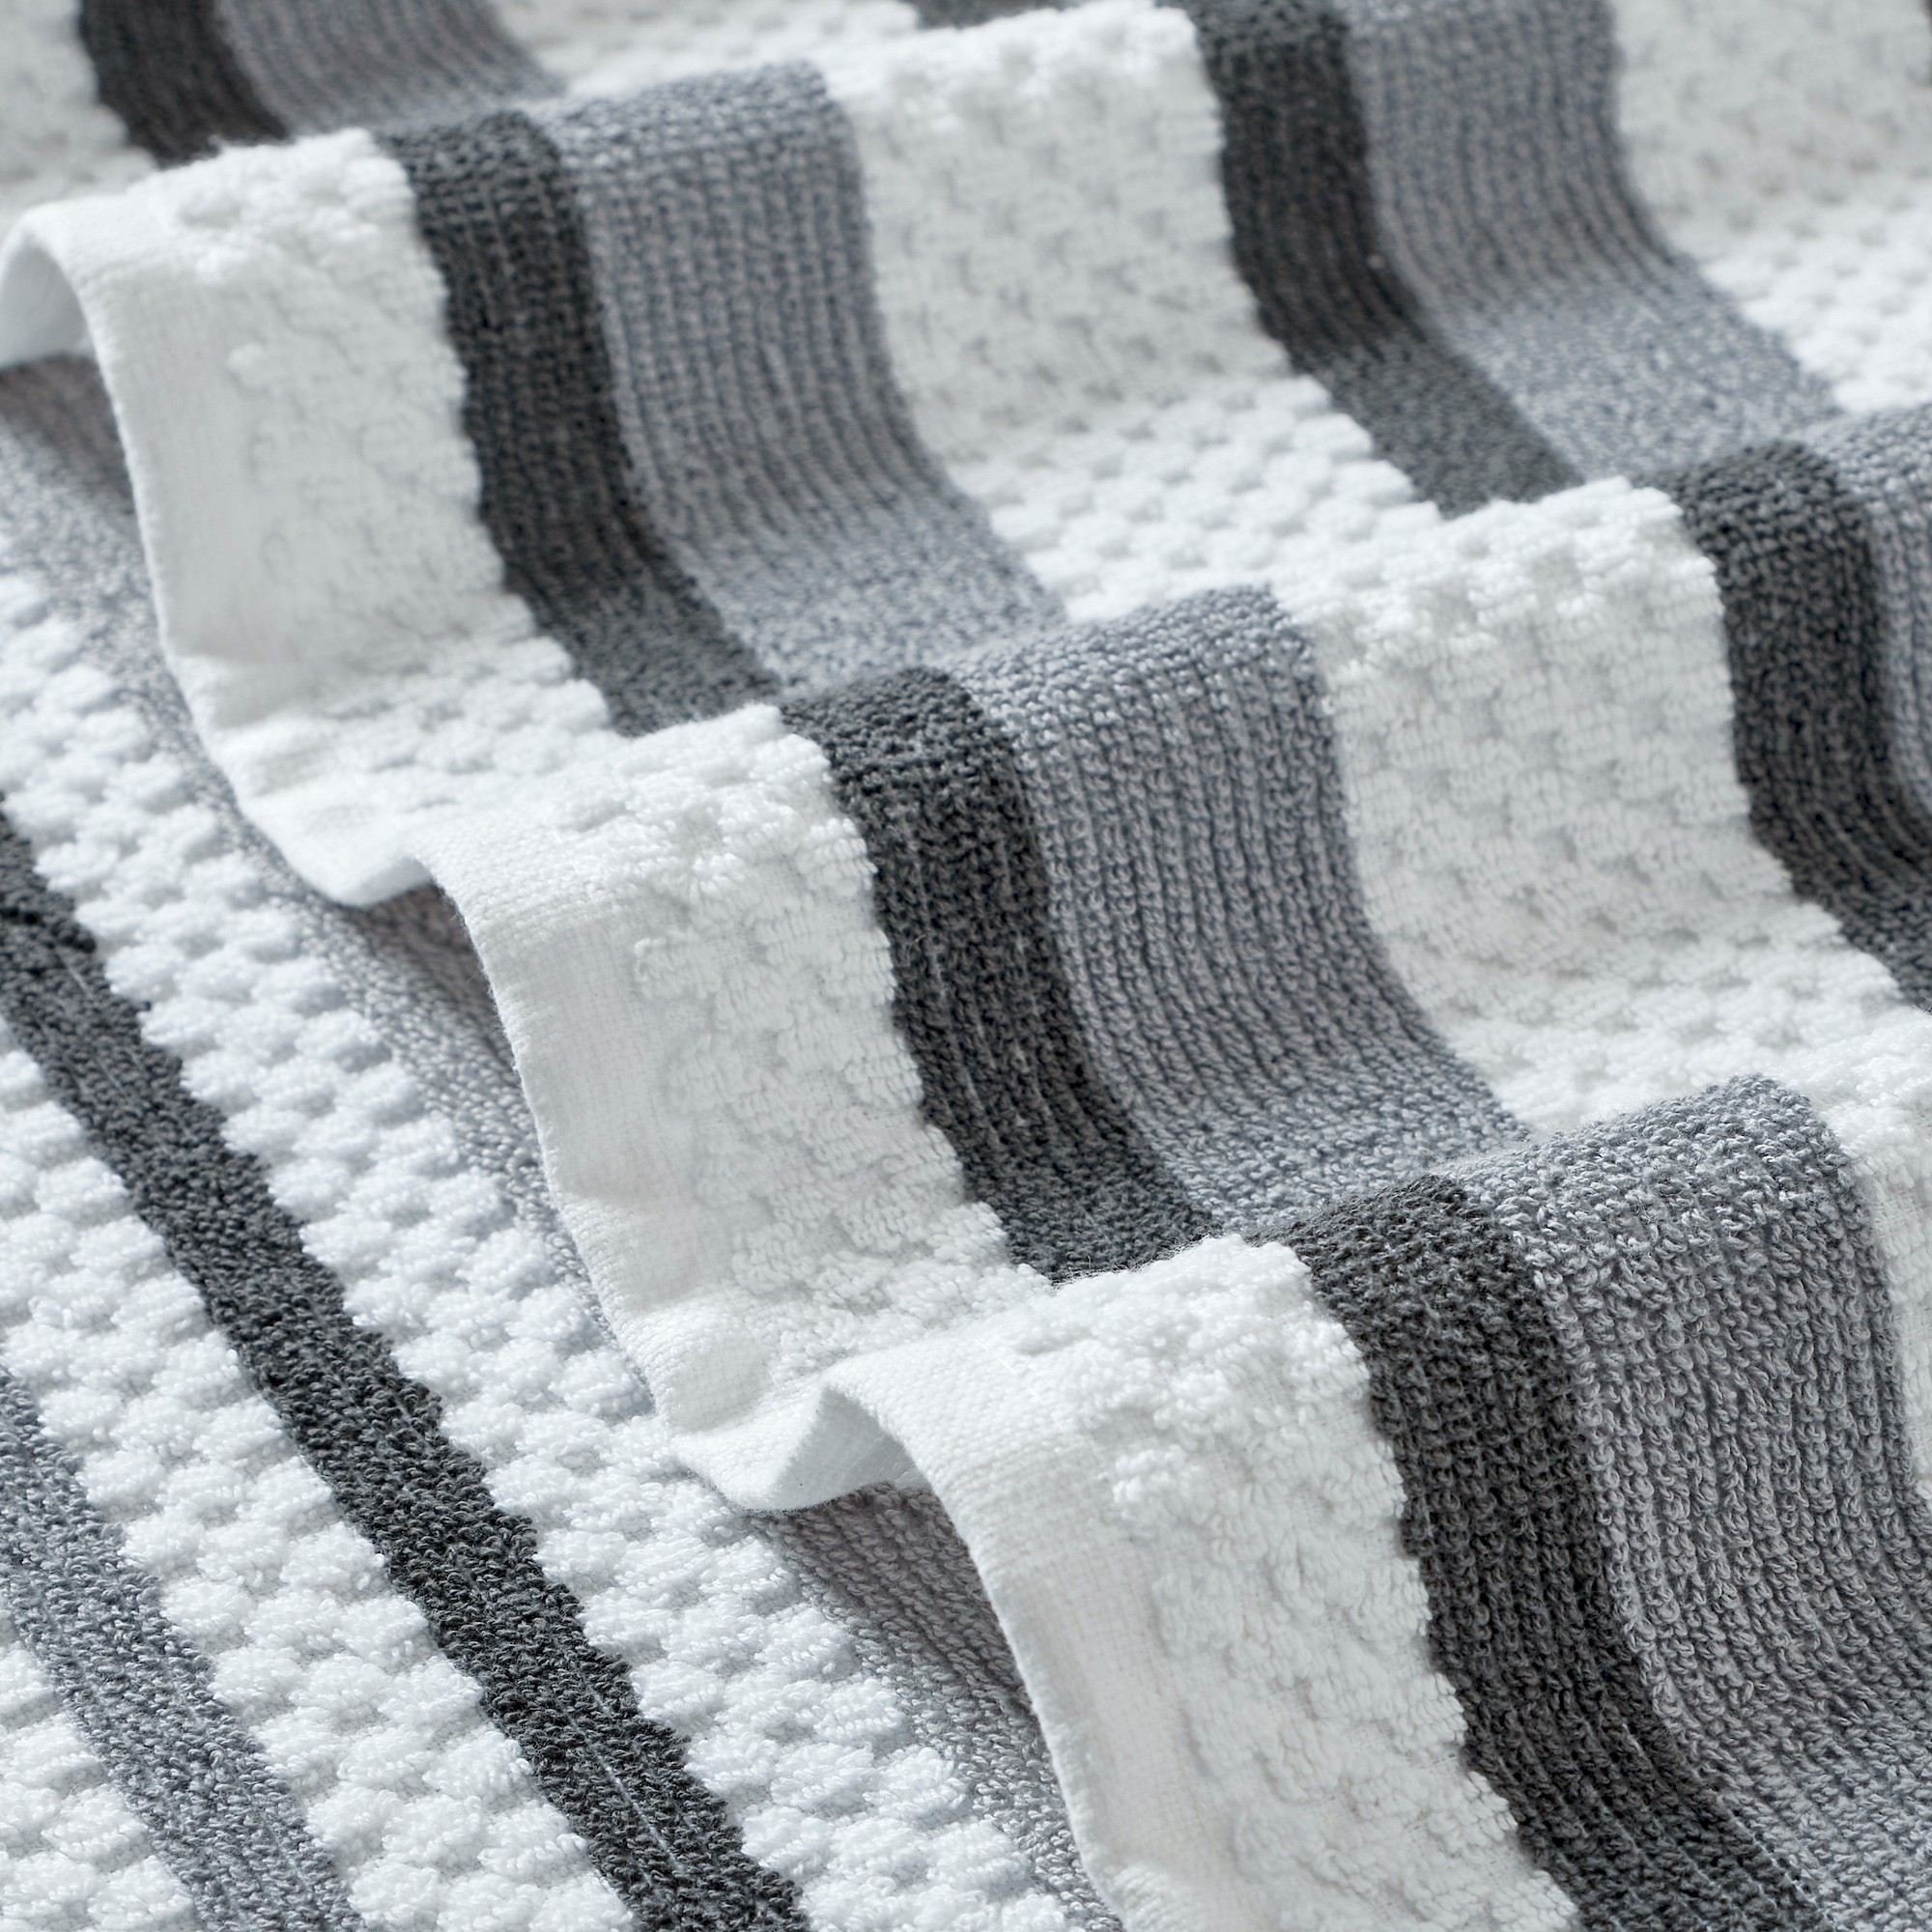 Nyx 6pc Soft Cotton Towel Set, Striped, White, Dark Gray By The Urban Port- Saltoro Sherpi